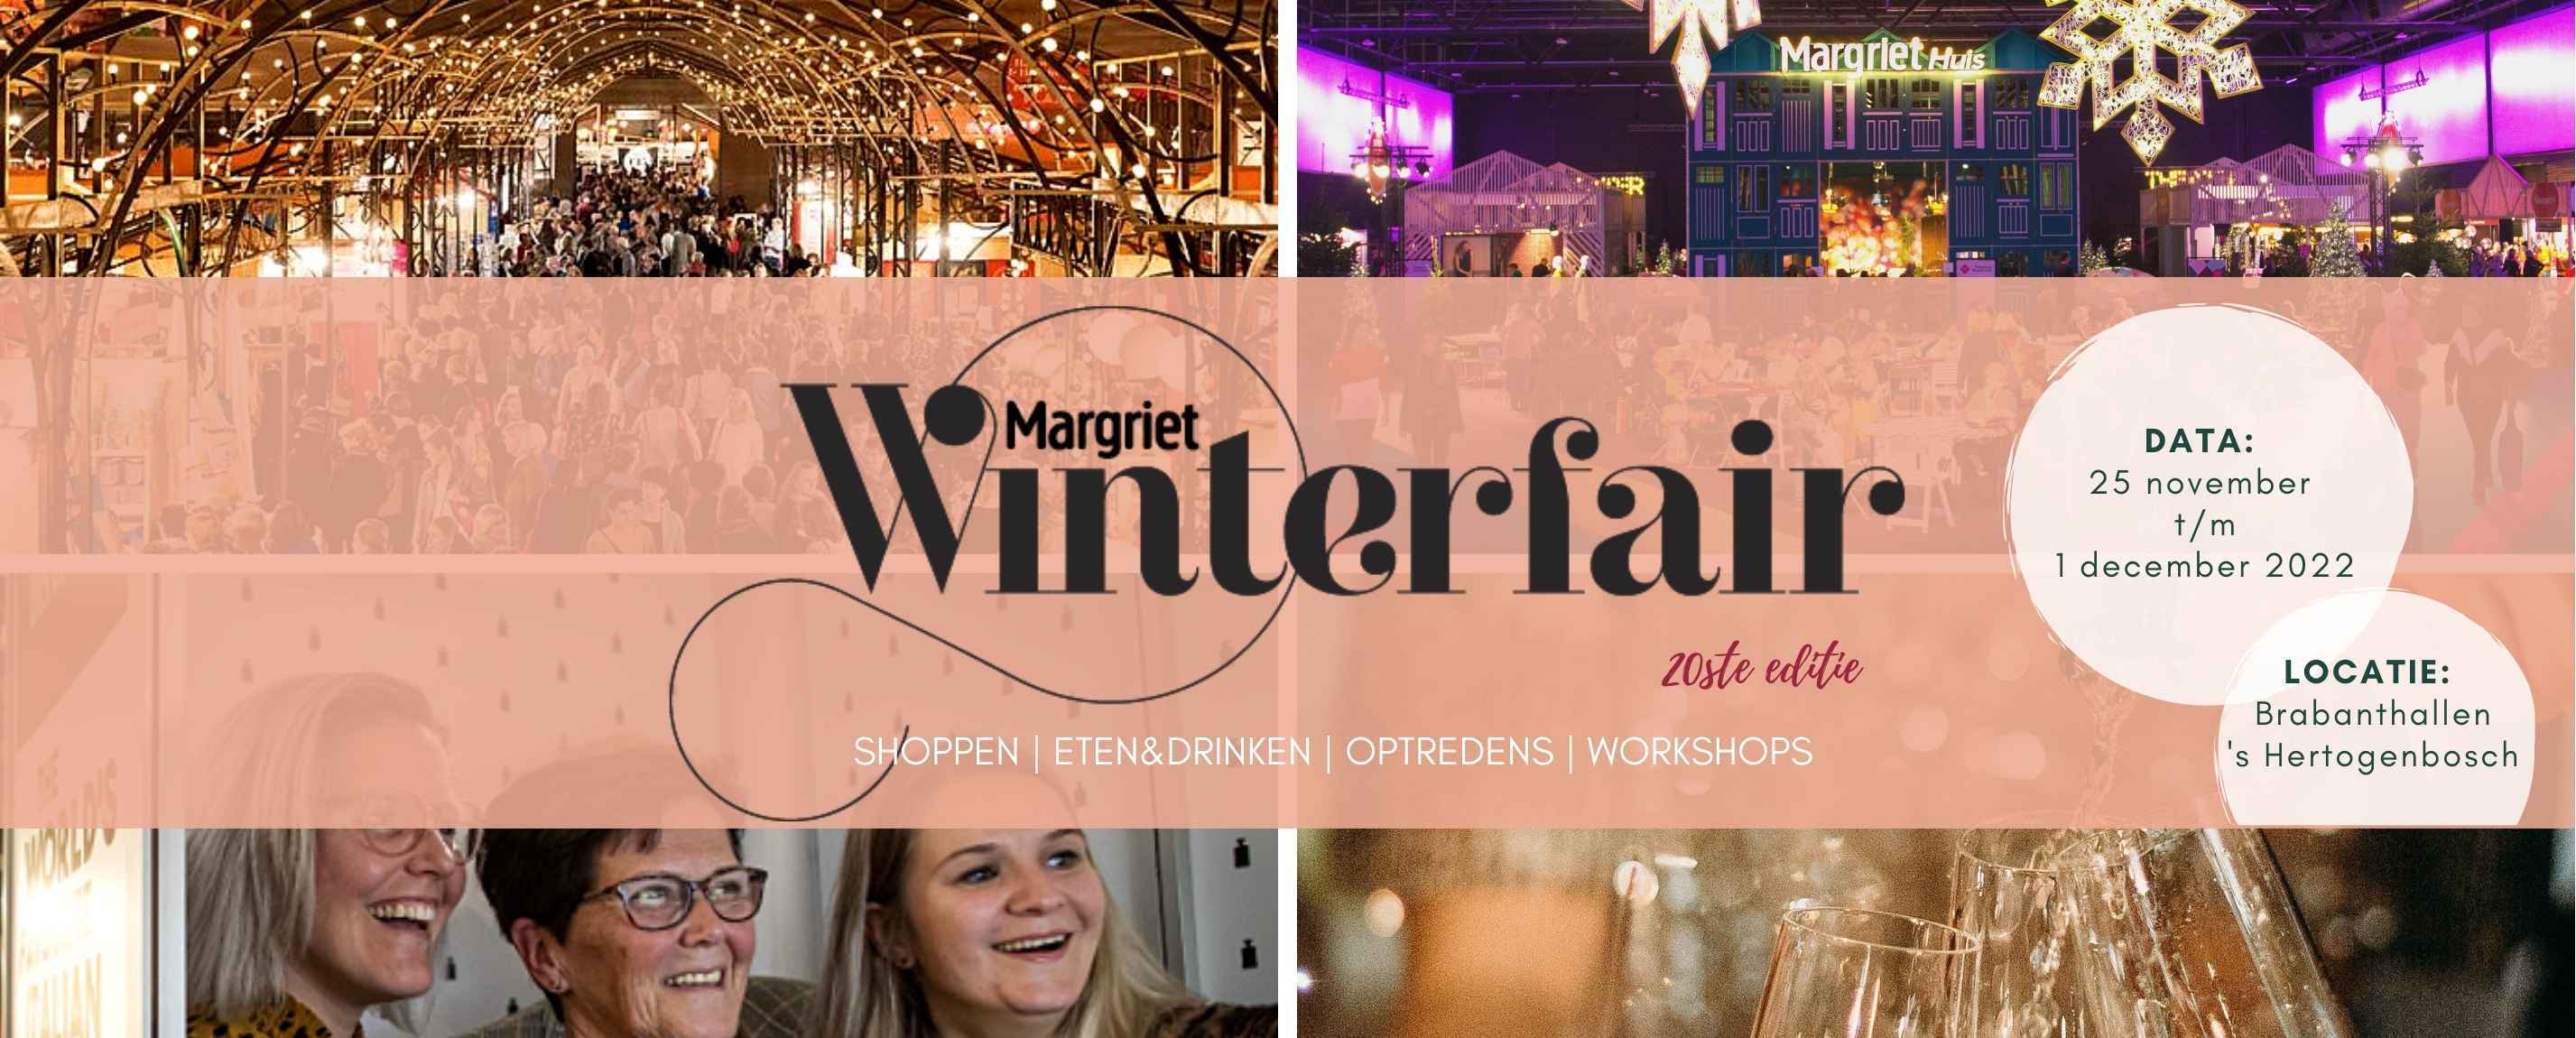 Margriet-winterfair-2022.jpg#asset:4306